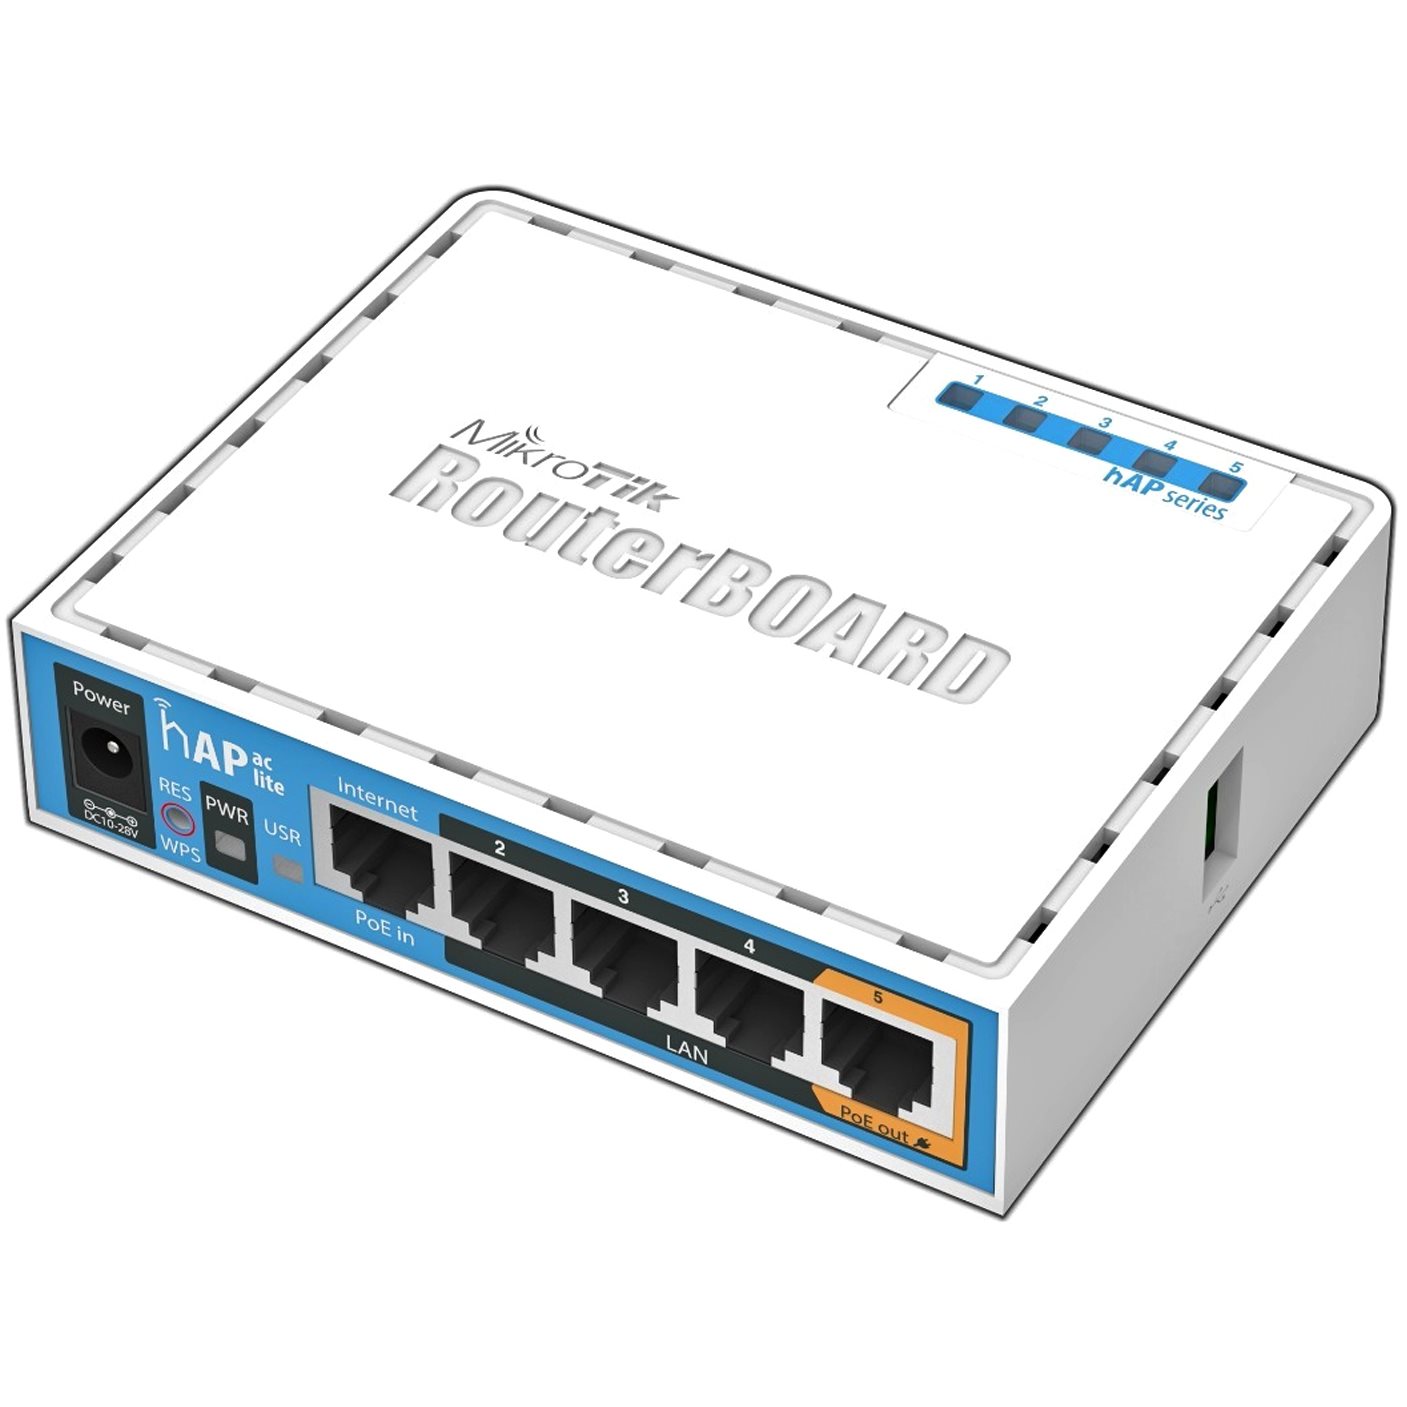   Routeurs Soho   Routeur 5 ports (1 PoE) + Wifi ac + USB RB952UI-5AC2ND